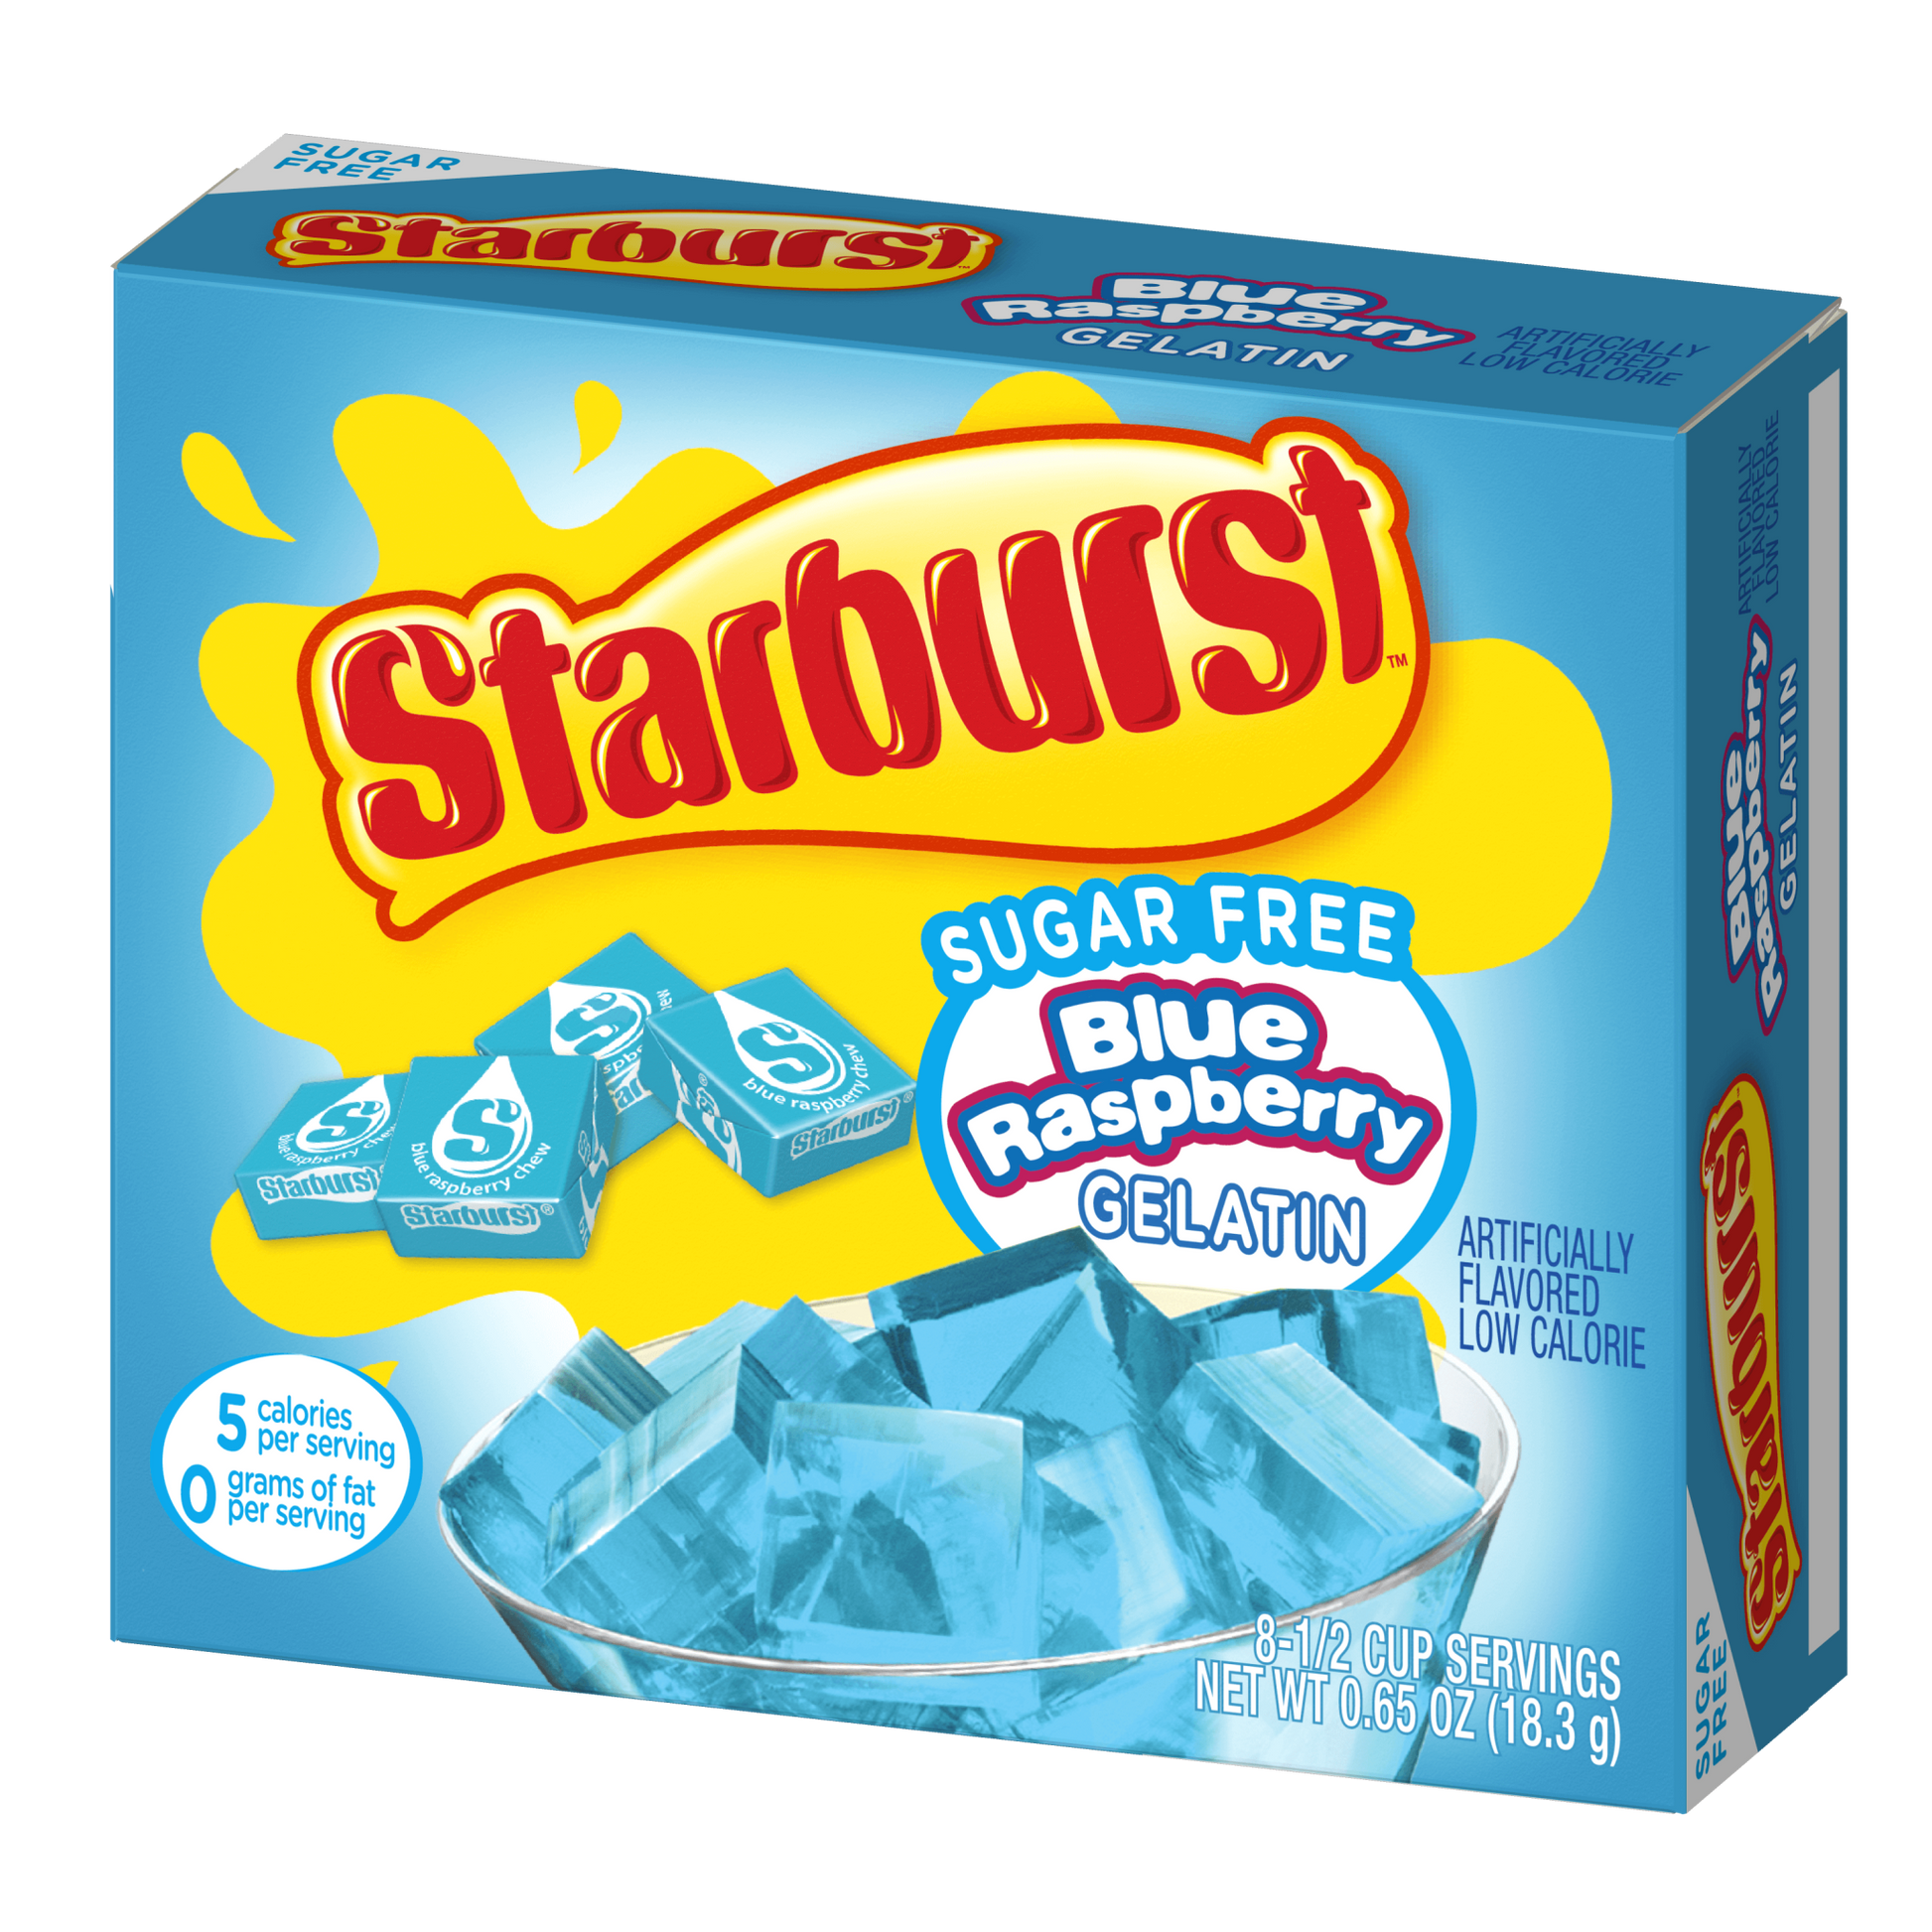 Starburst blue raspberry sugar-free gelatin packaging